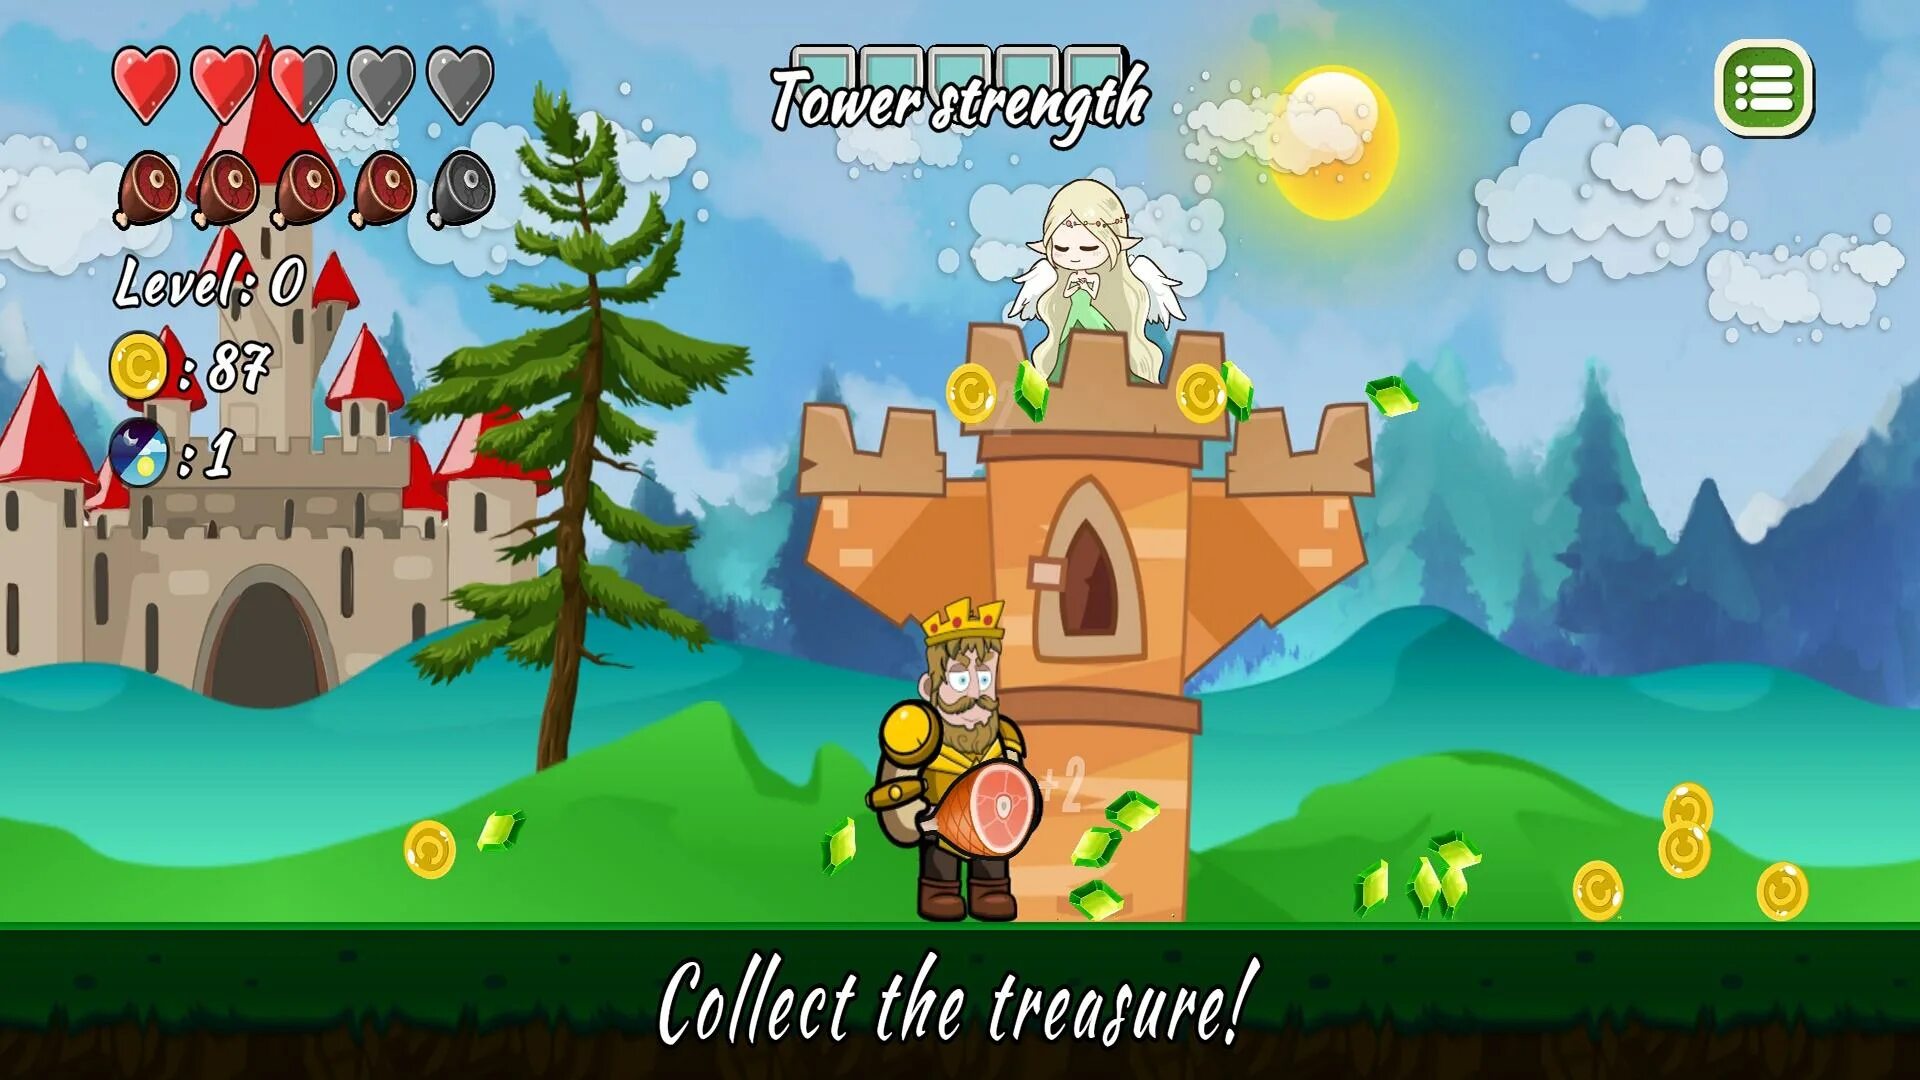 Игра спасти принцессу. Спасение принцессы. Игра рыцарь спасает принцессу из замка. Андроид игра про спасение принцесс.